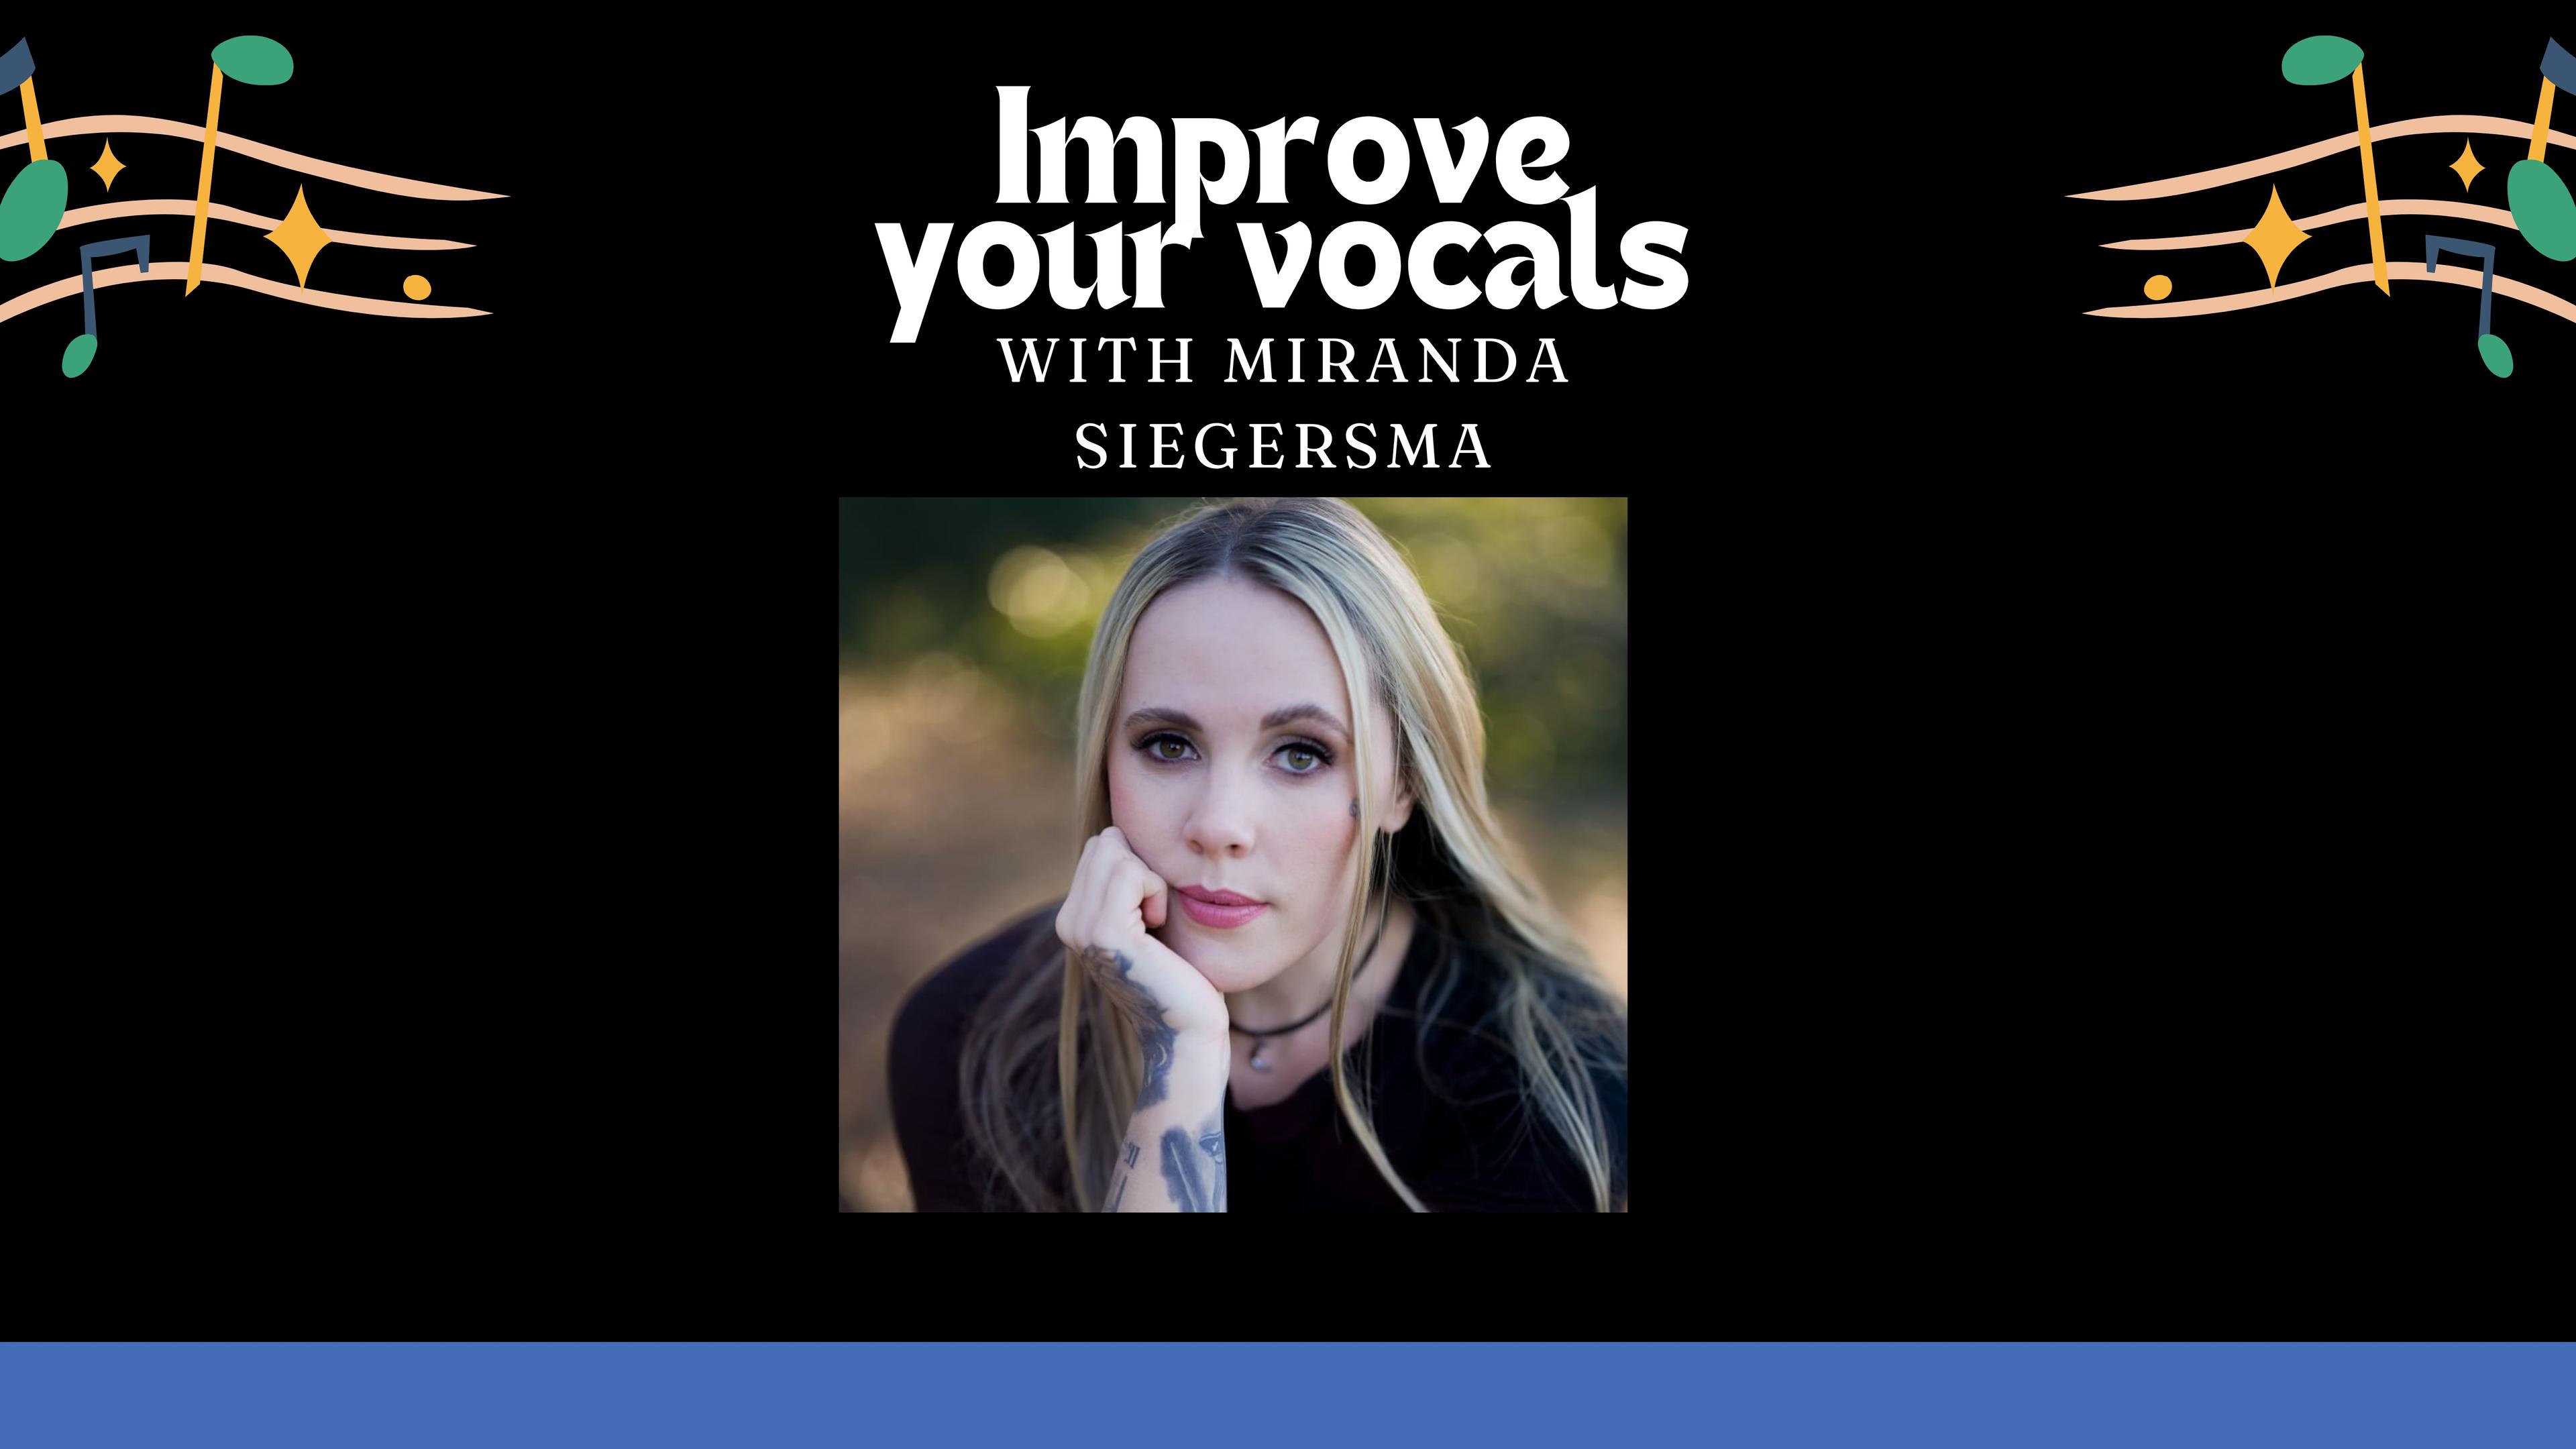 Improve your vocals INSTANTLY!